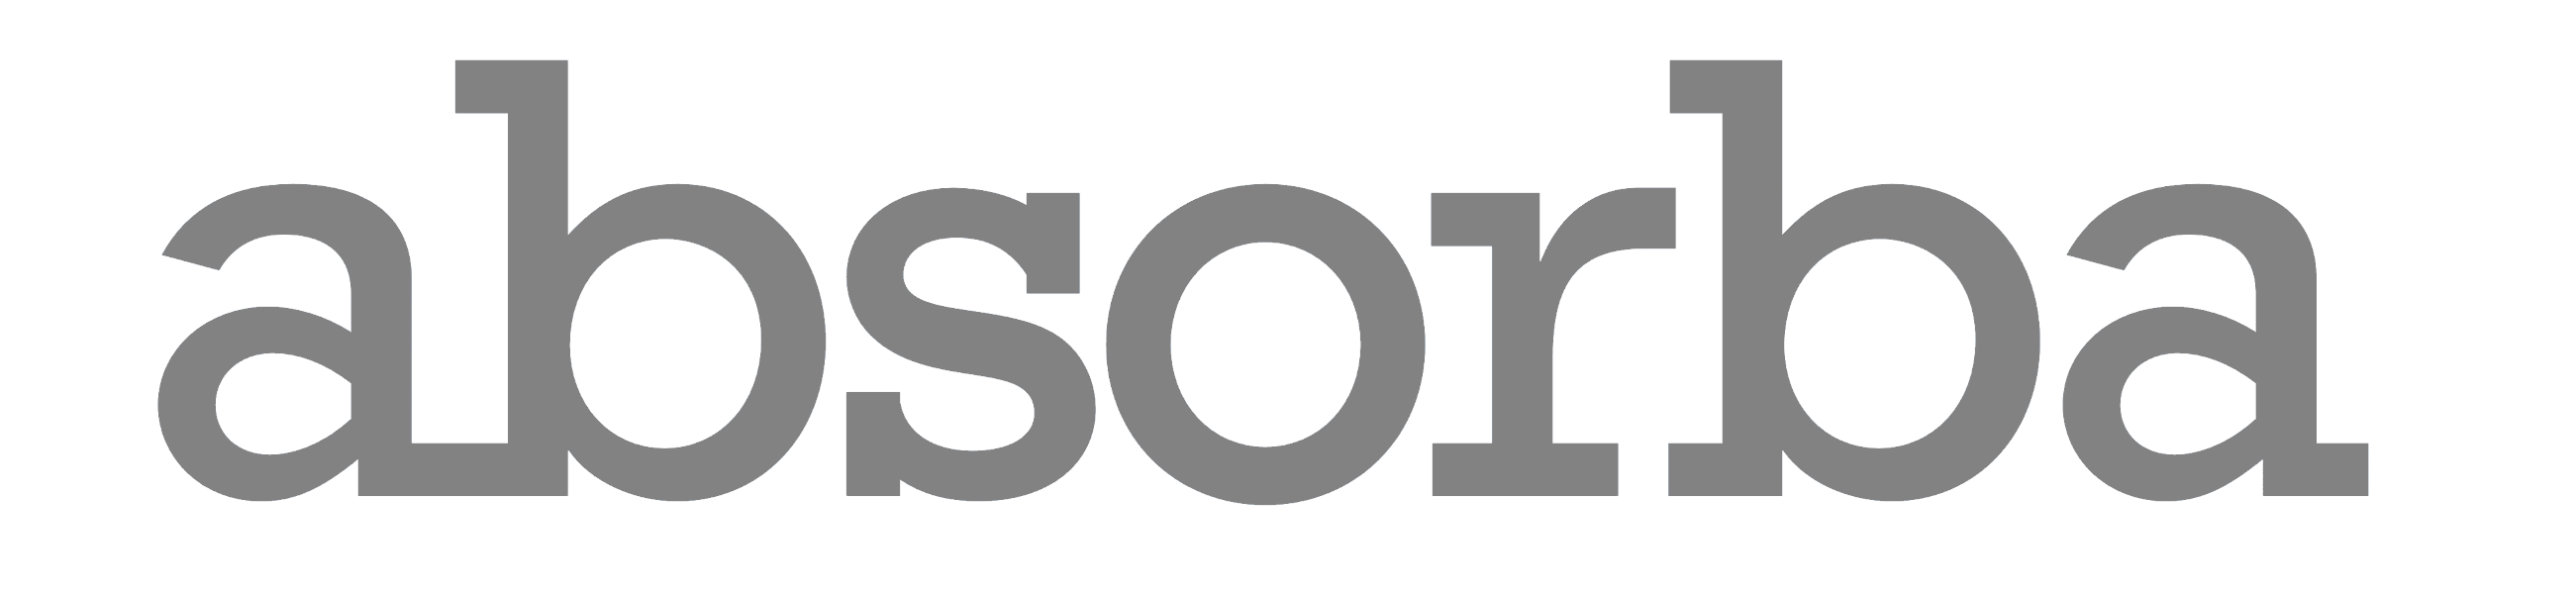 Absorba logo, logotype